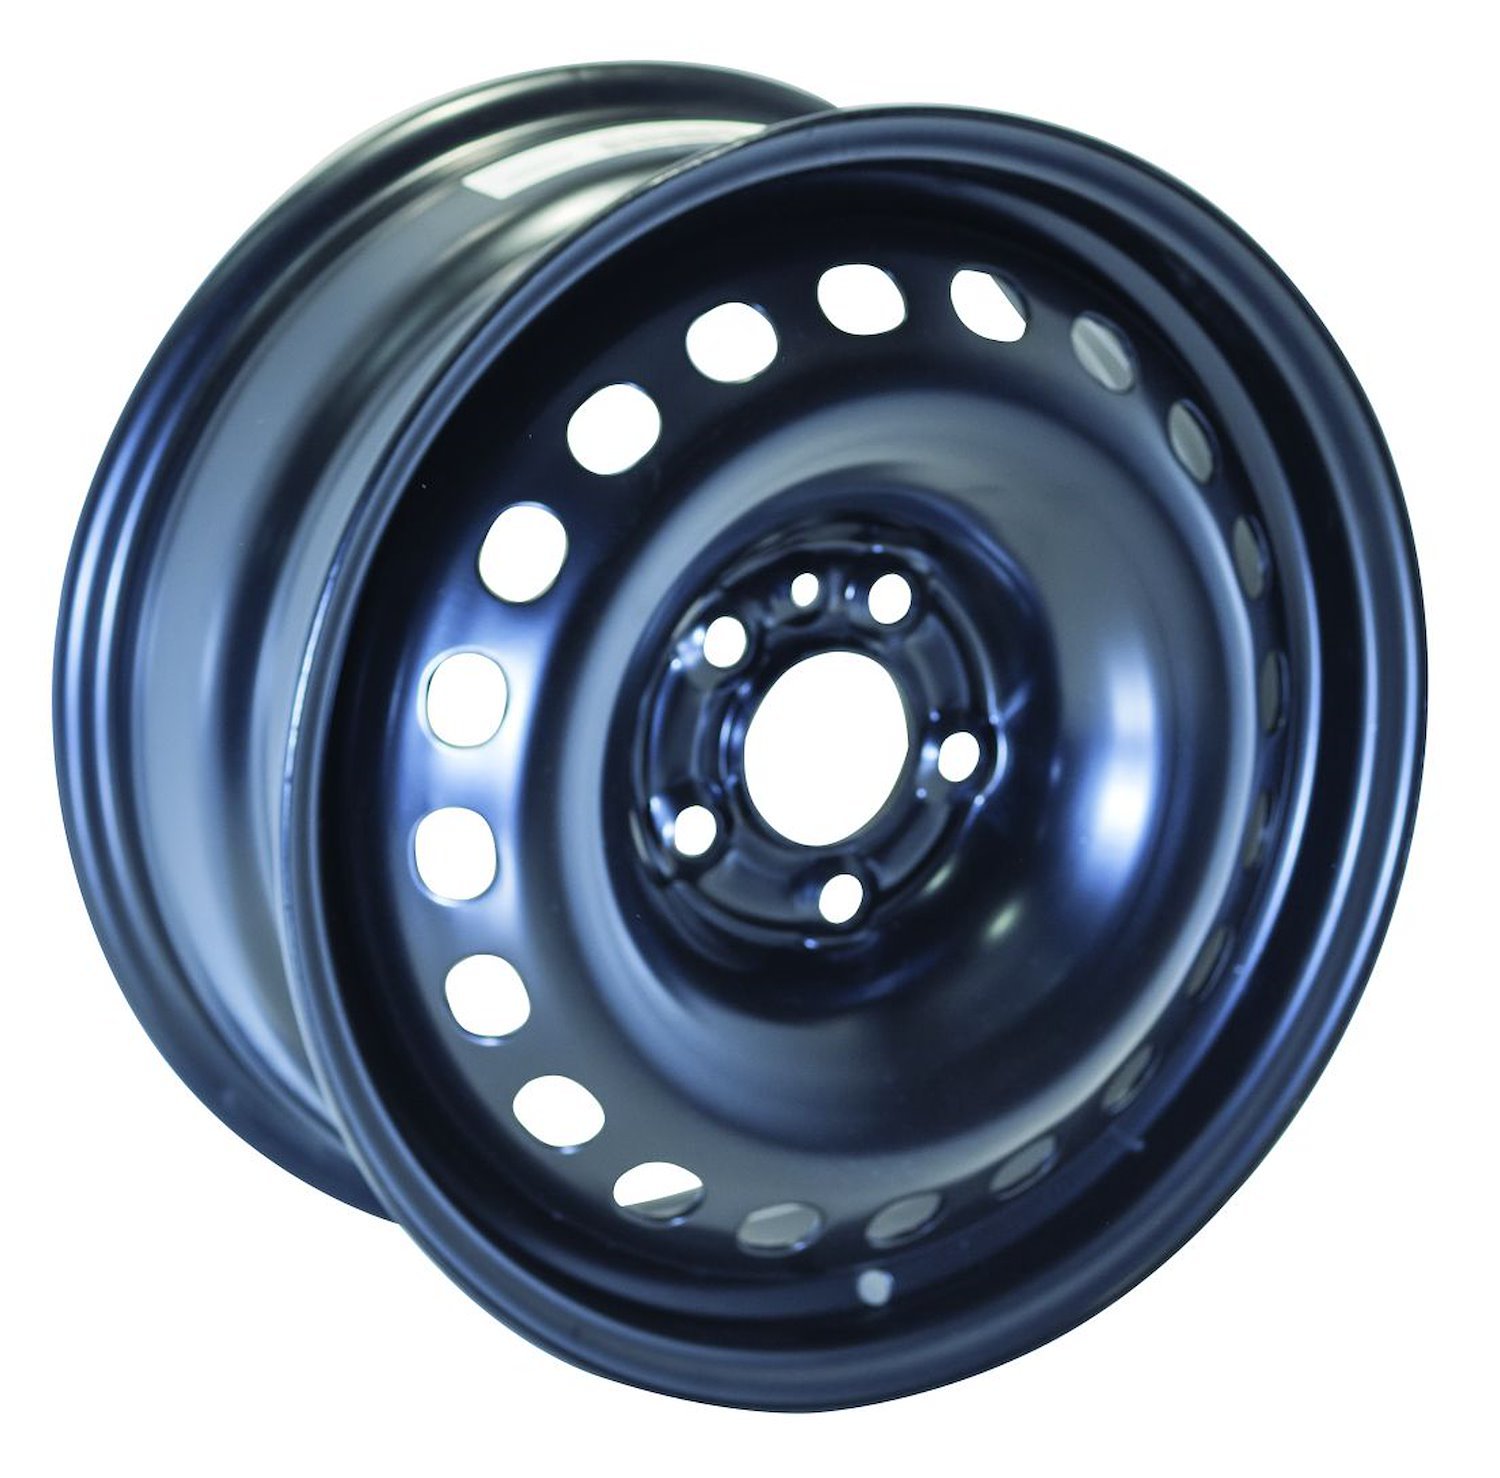 X46510 Steel Wheel [Size: 16" x 7"] Black Finish